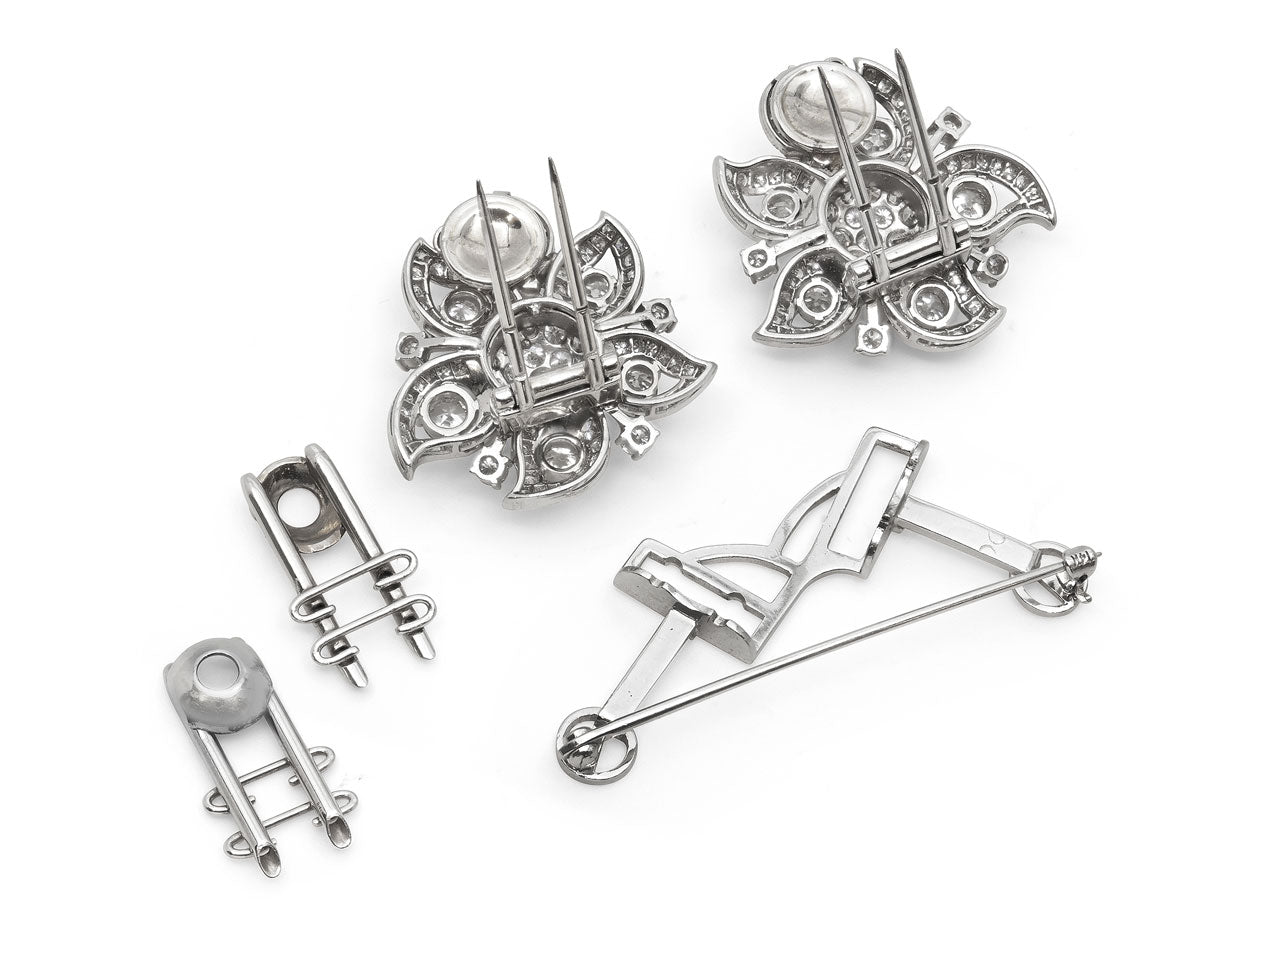 Mid-Century Floral Diamond Earrings / Brooch in Platinum